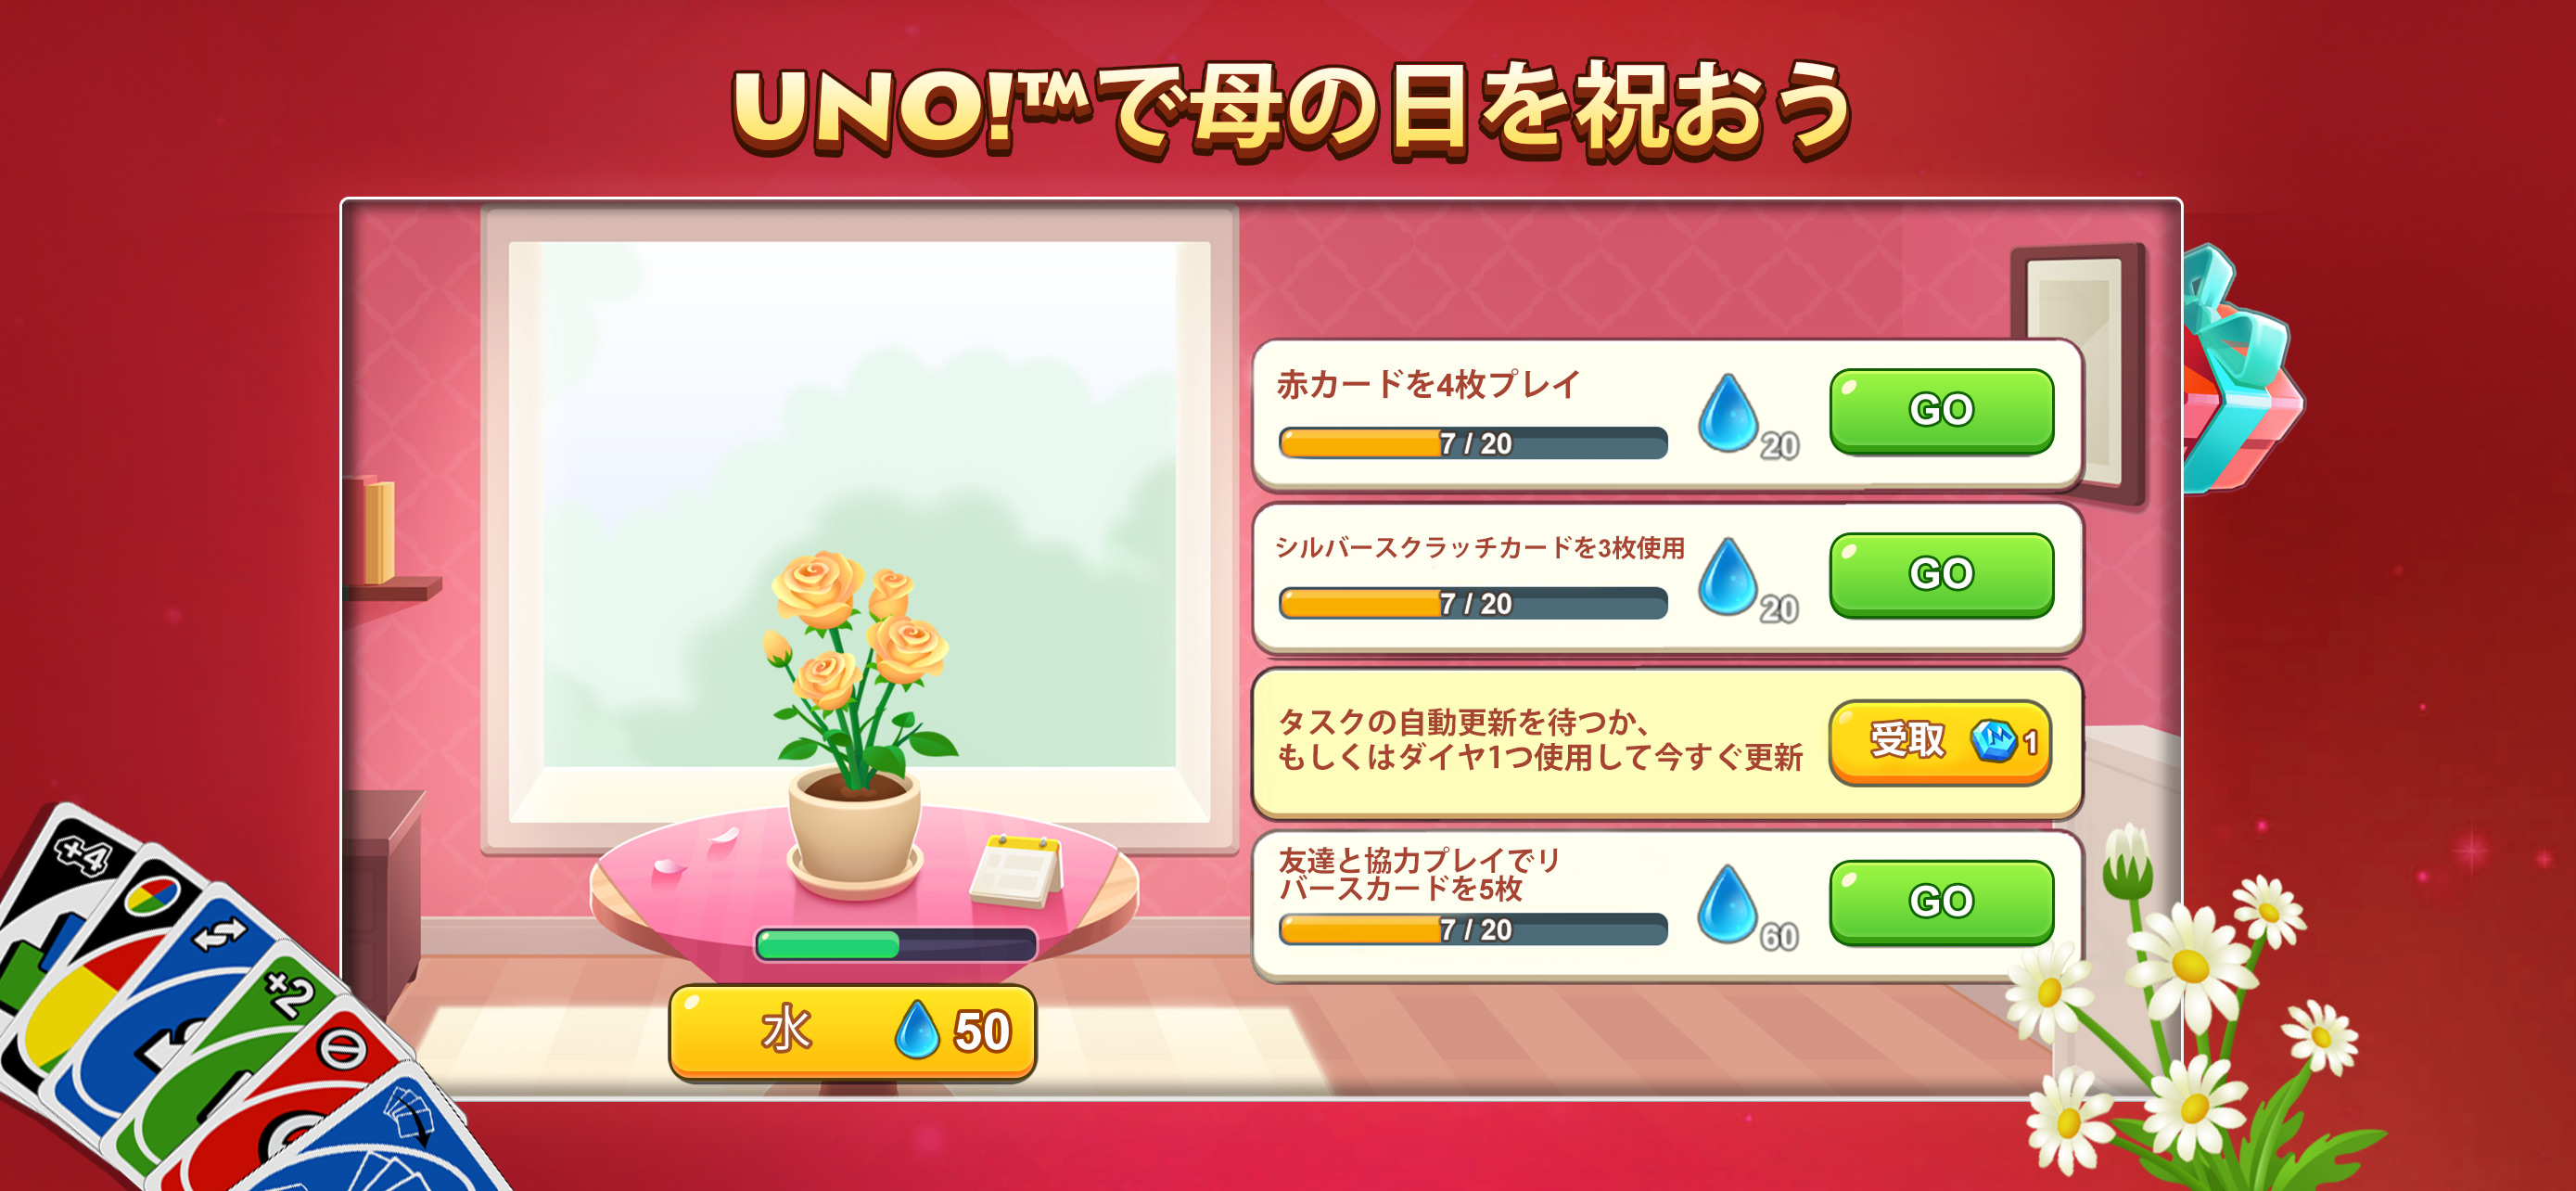 Uno Overview Apple App Store Japan